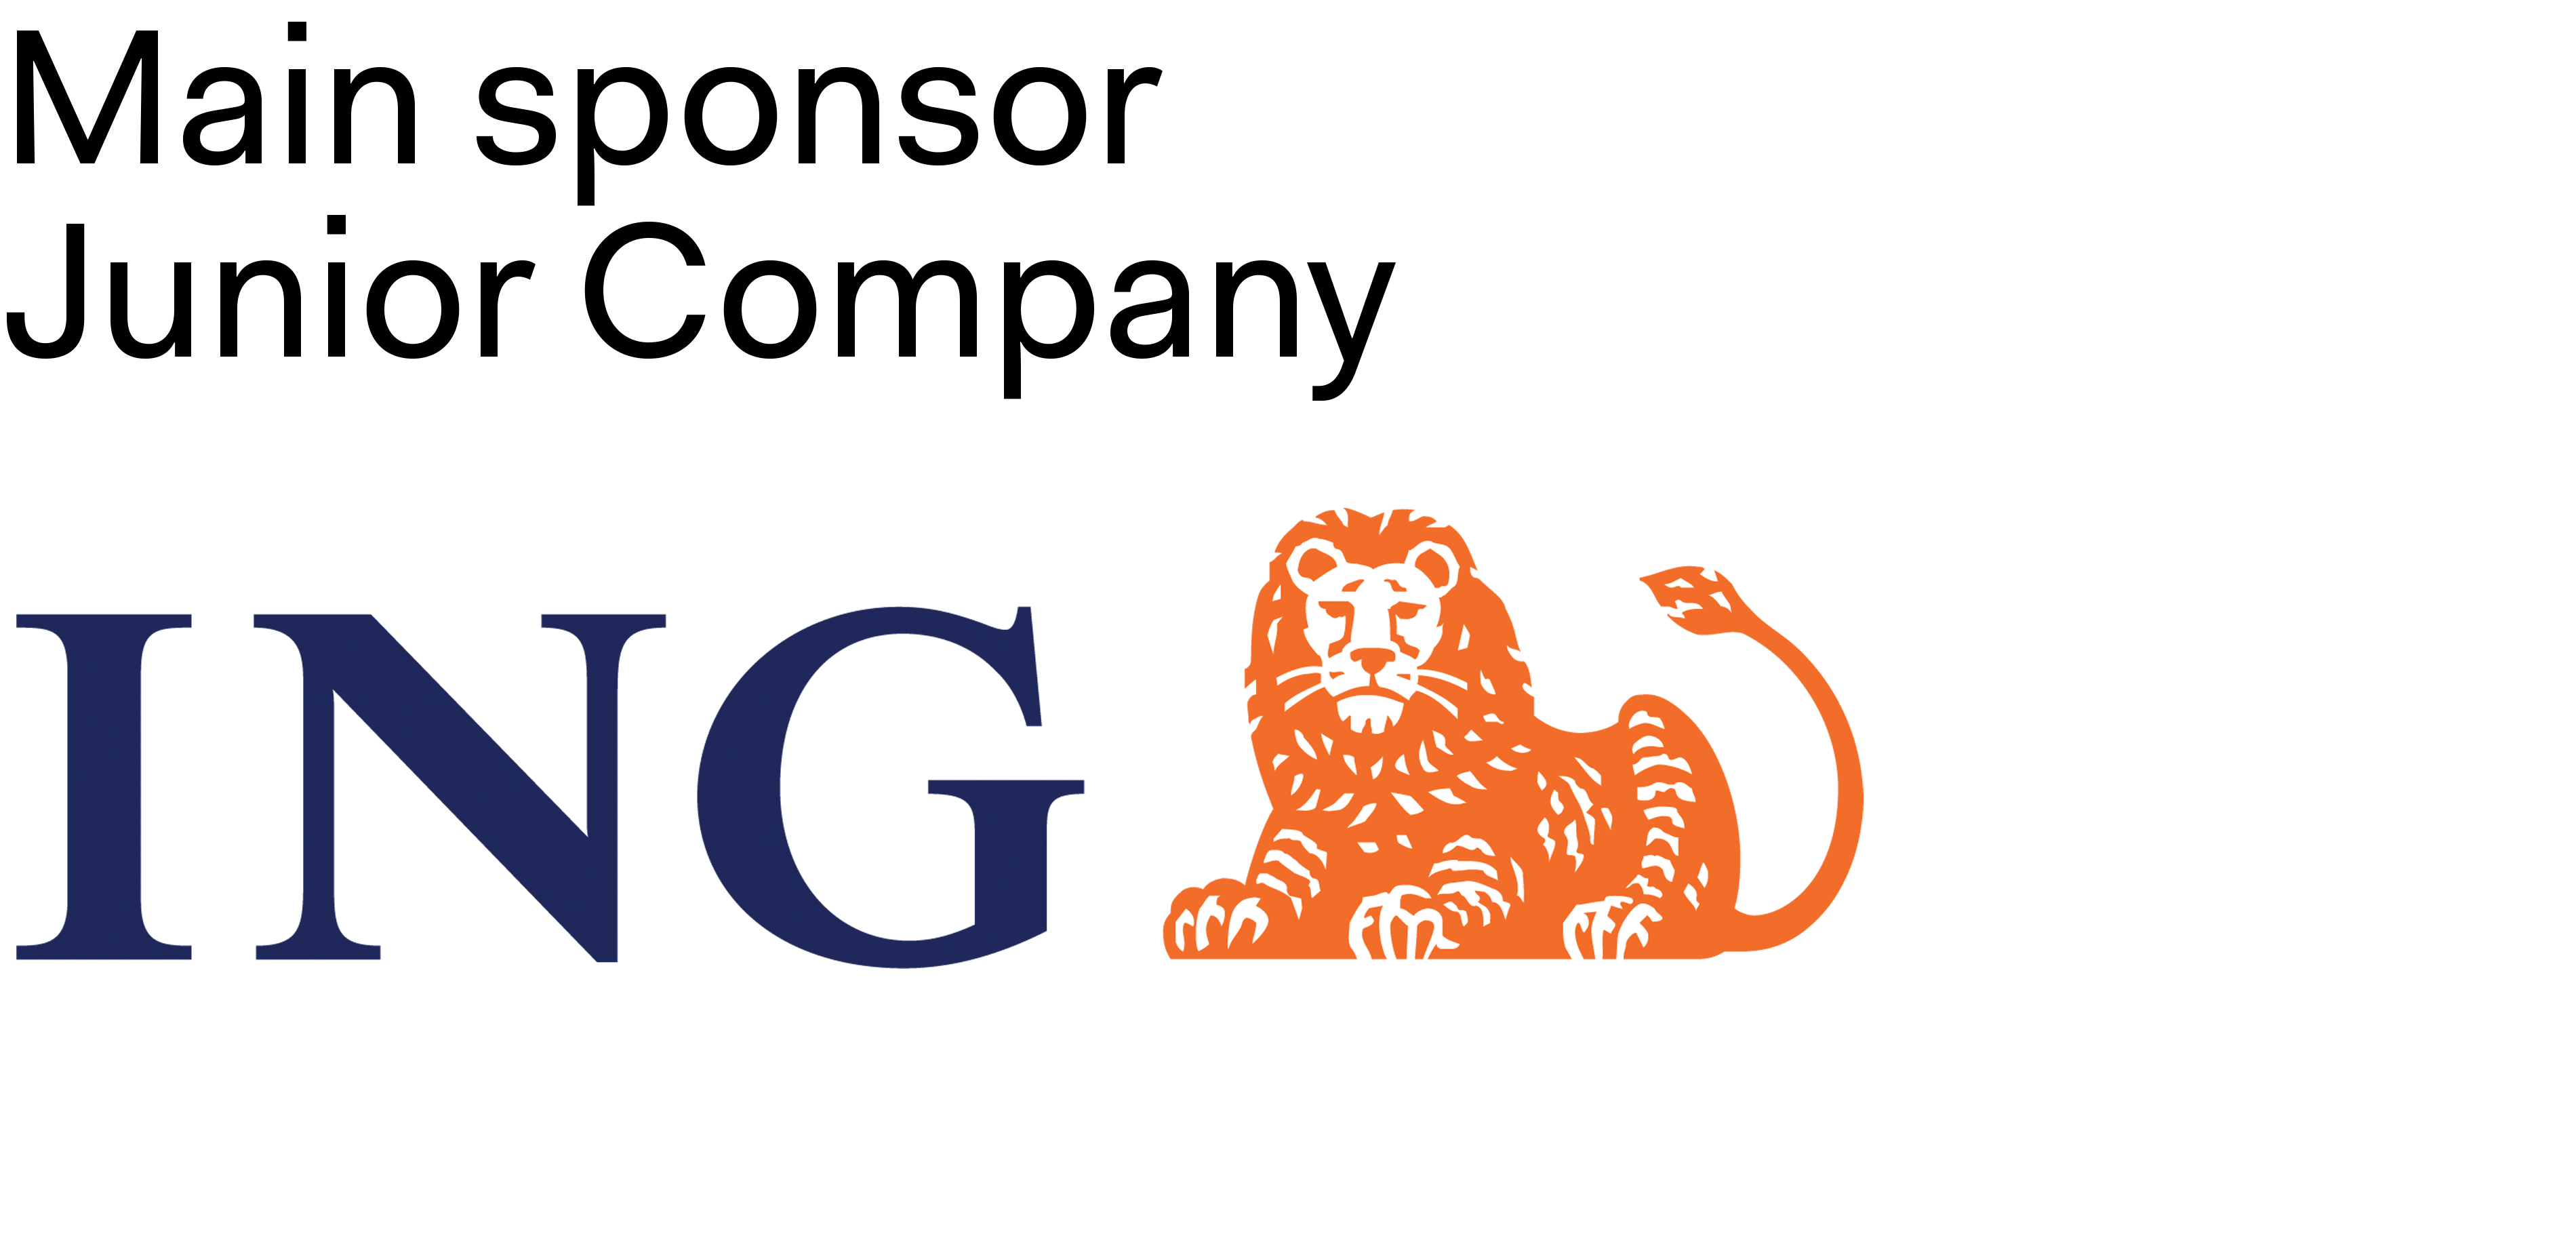 ING logo main sponsor Junior Company